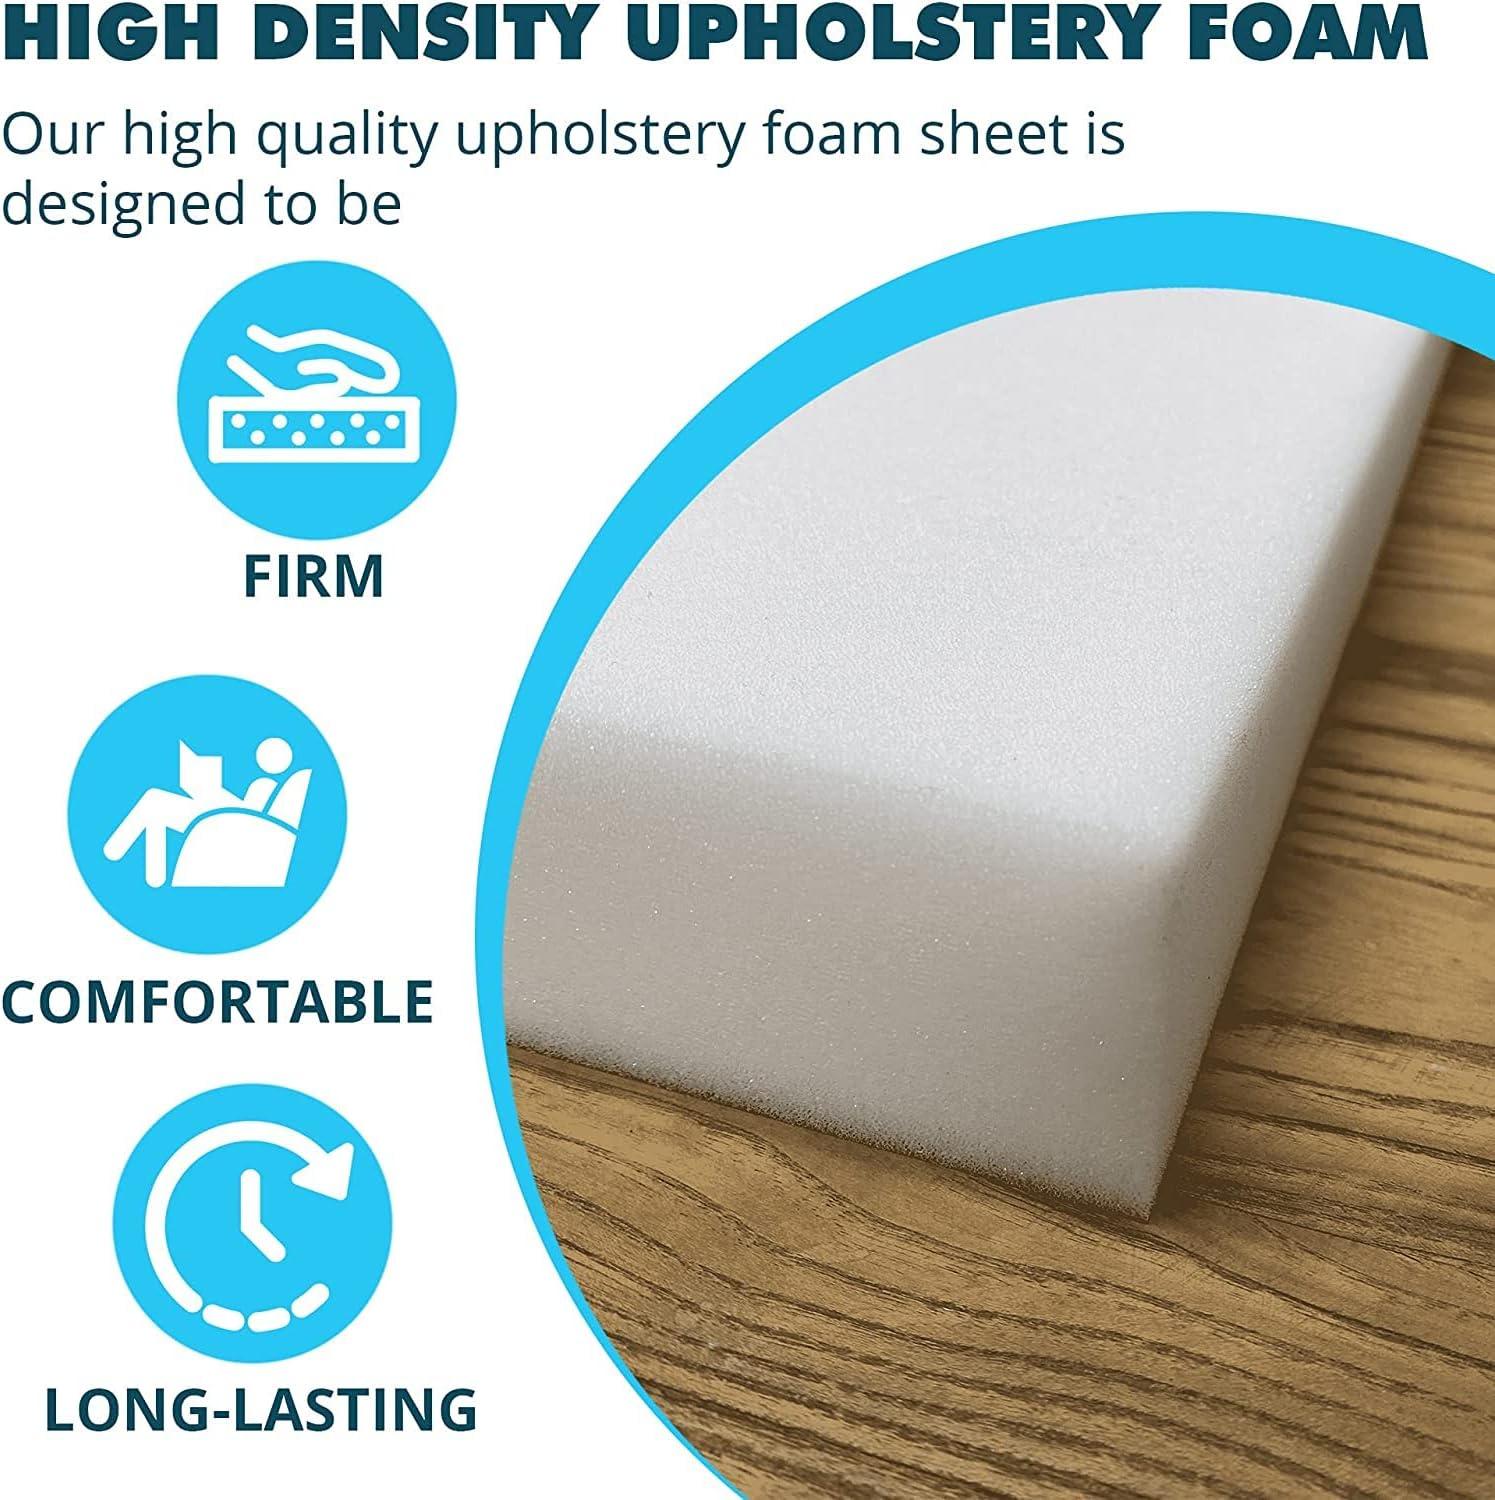 Foamma 1 x 18 x 18 High Density Upholstery Foam Cushion (Seat Replacement, Upholstery Sheet, Foam Padding) Made in Usa!!